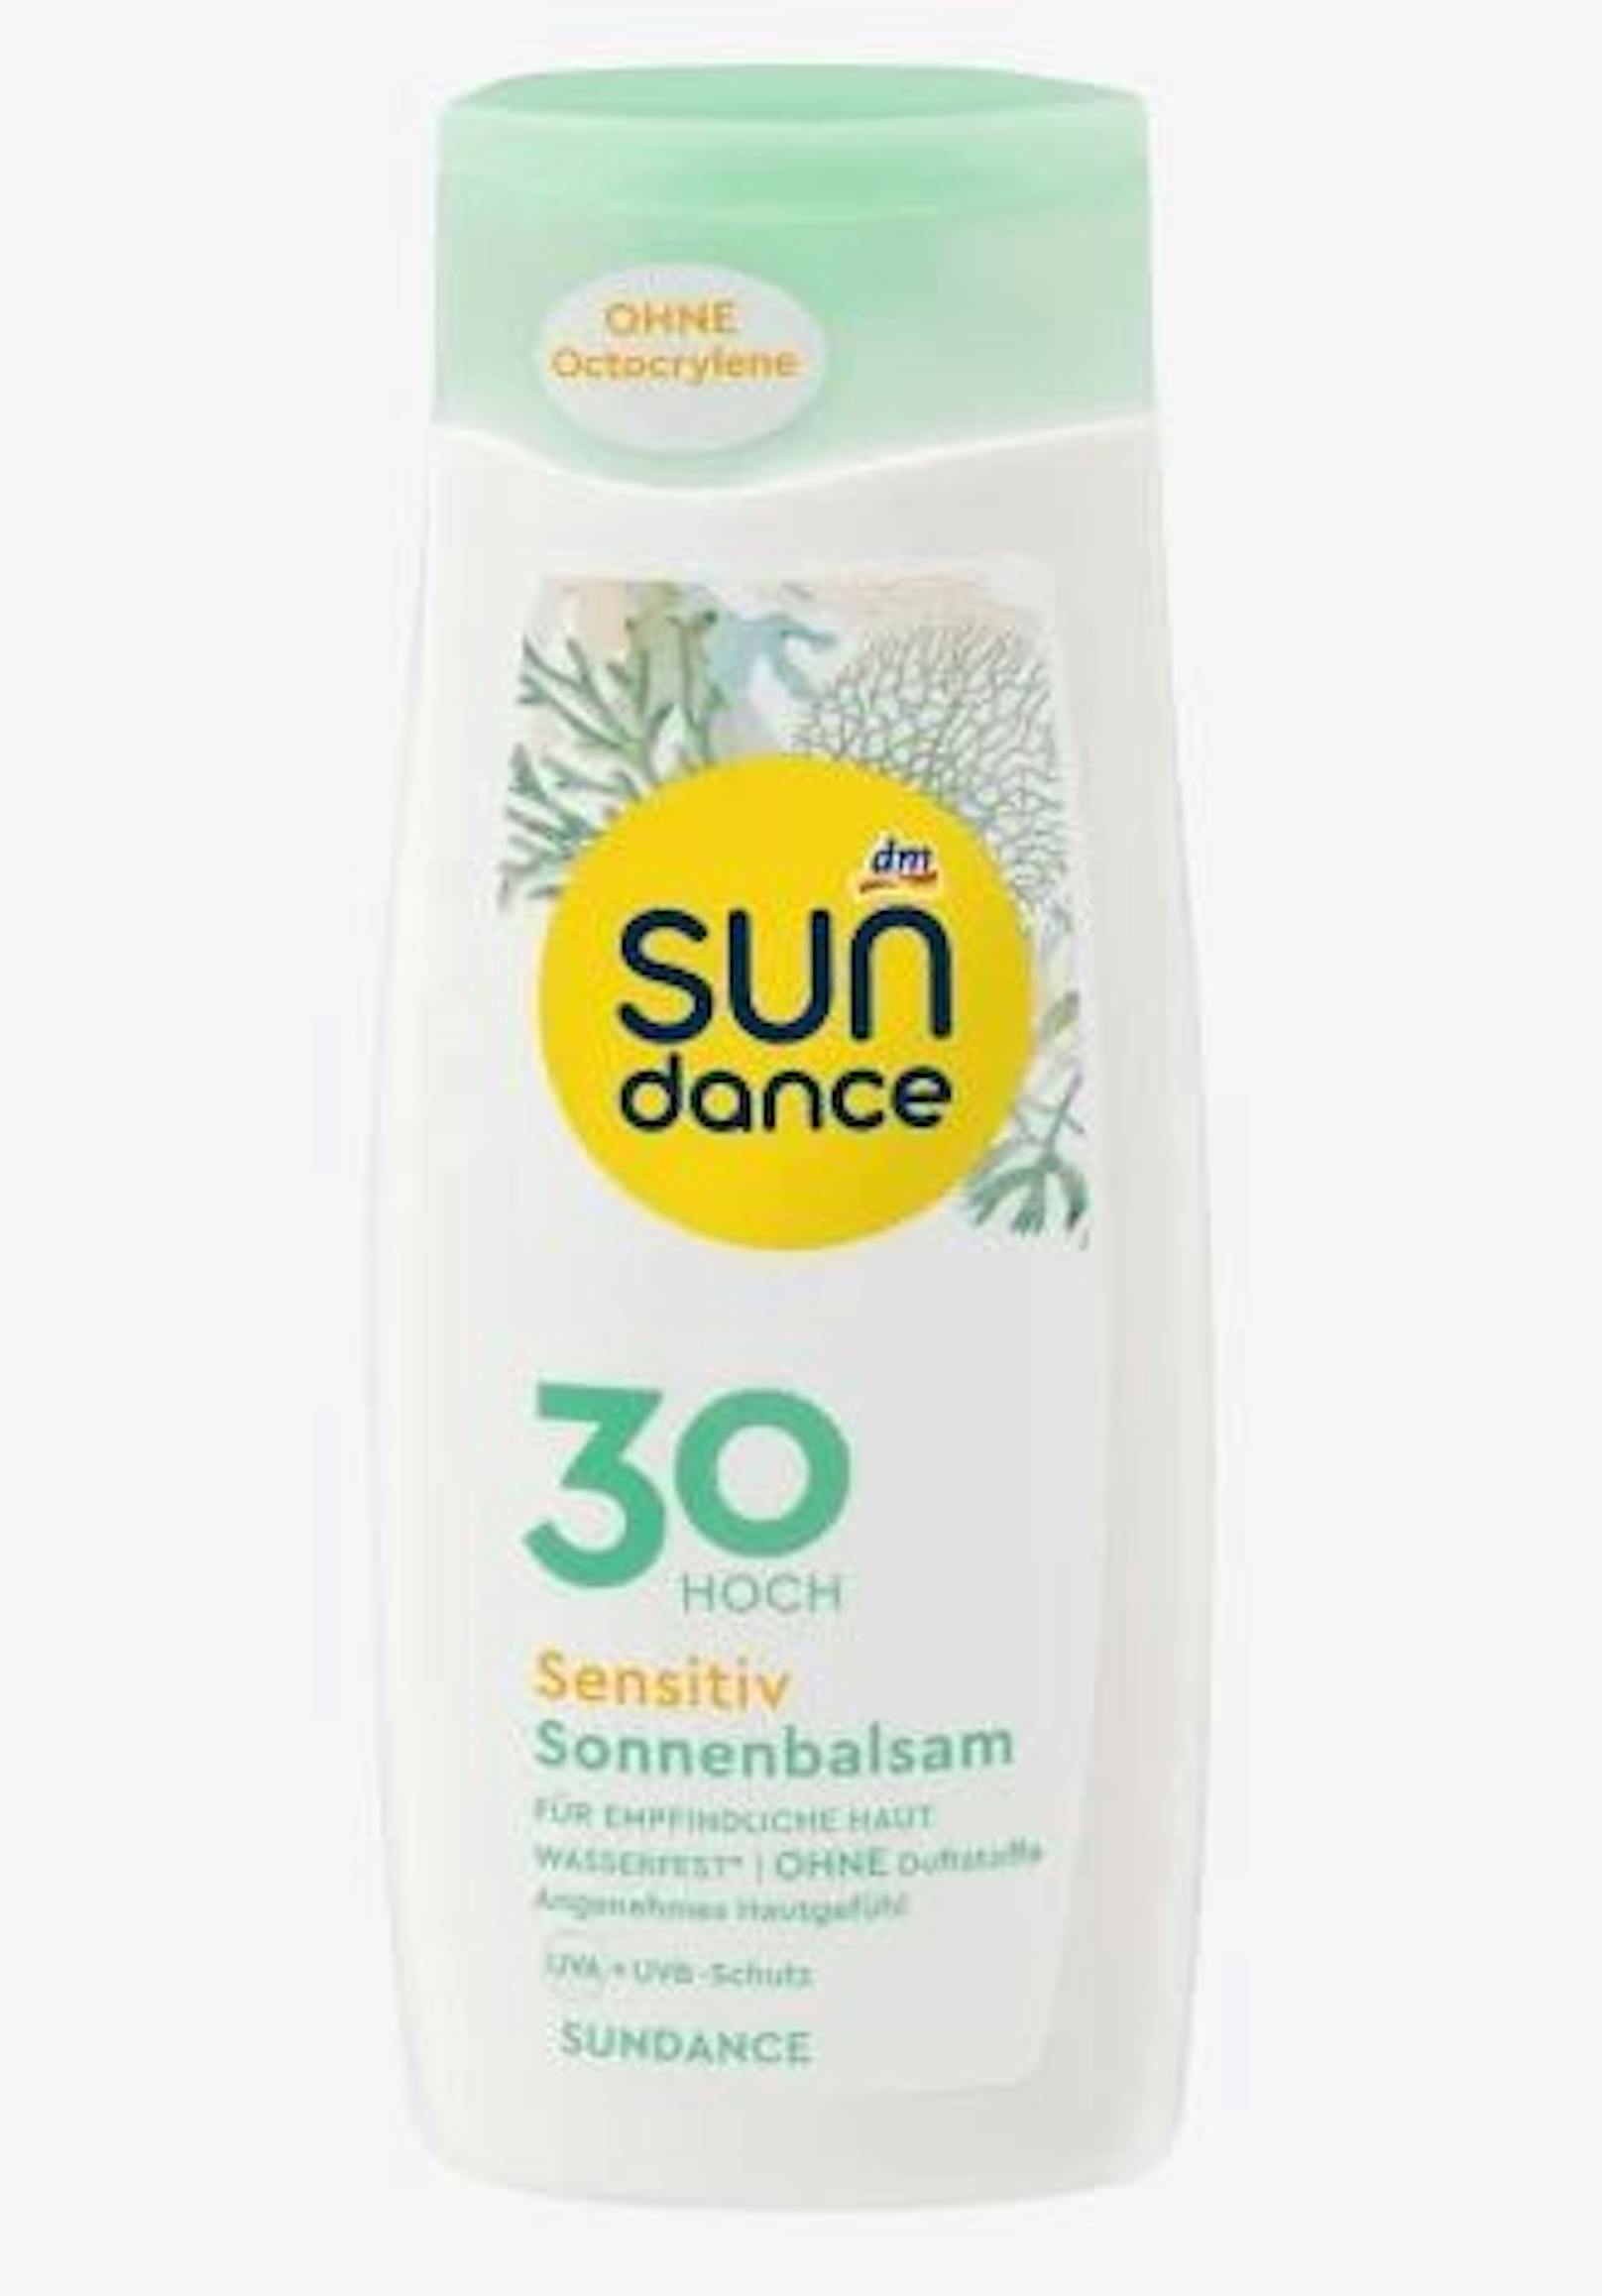 DM Sundance sensitiv Sonnenbalsam, 300ml um 3,95 Euro.